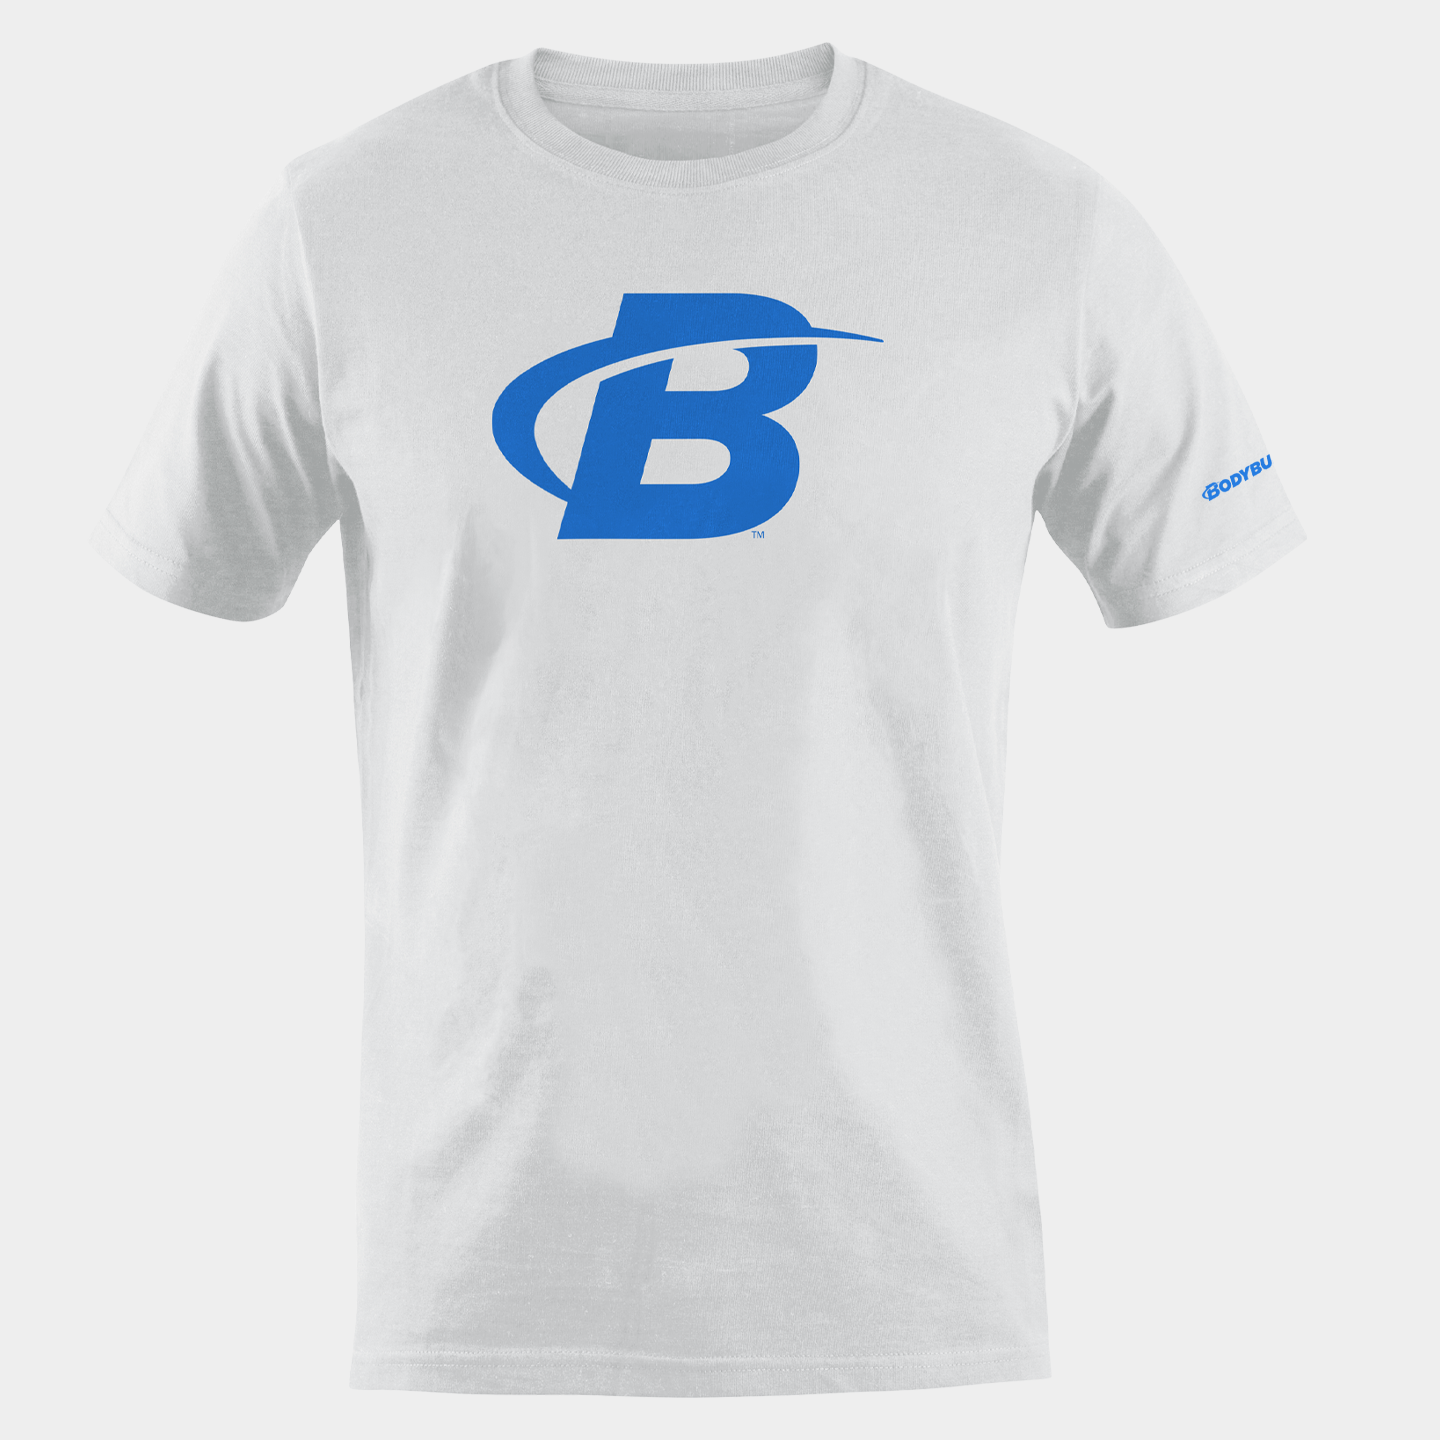 Bodybuilding.com Clothing Classic B Logo Tee, White, M A1